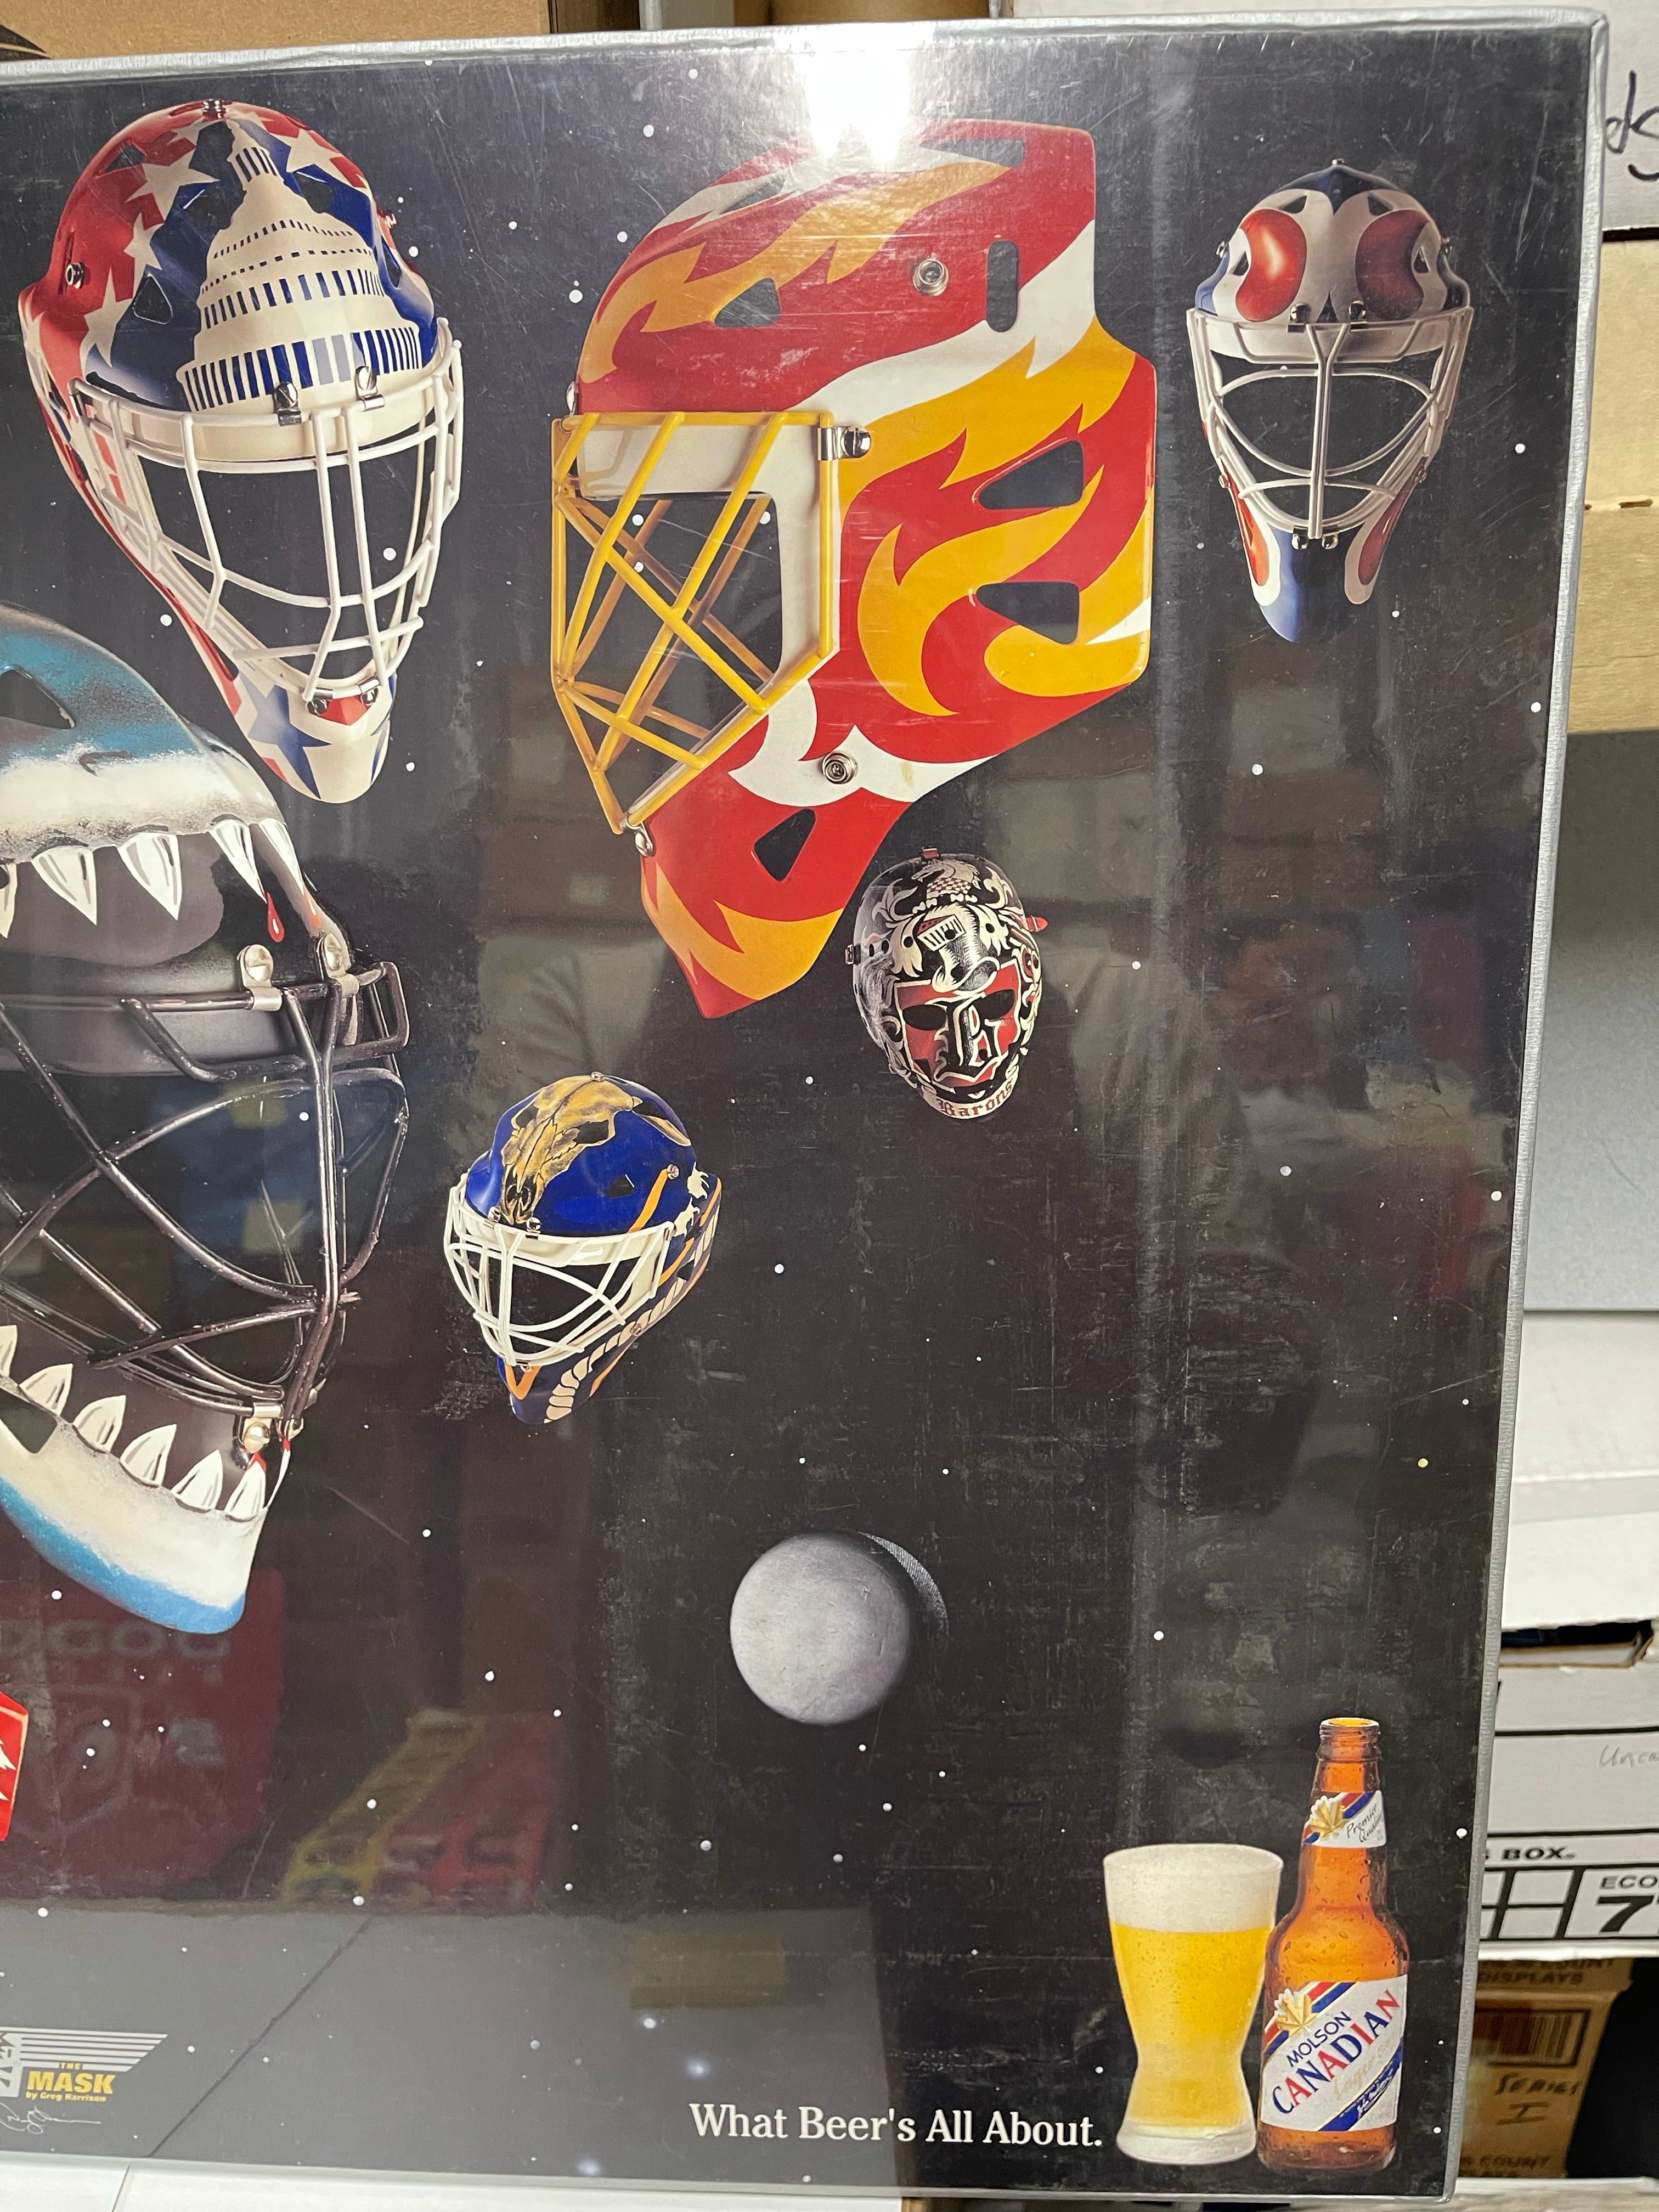 Goalies Molson Beer rare matted hockey poster 1989